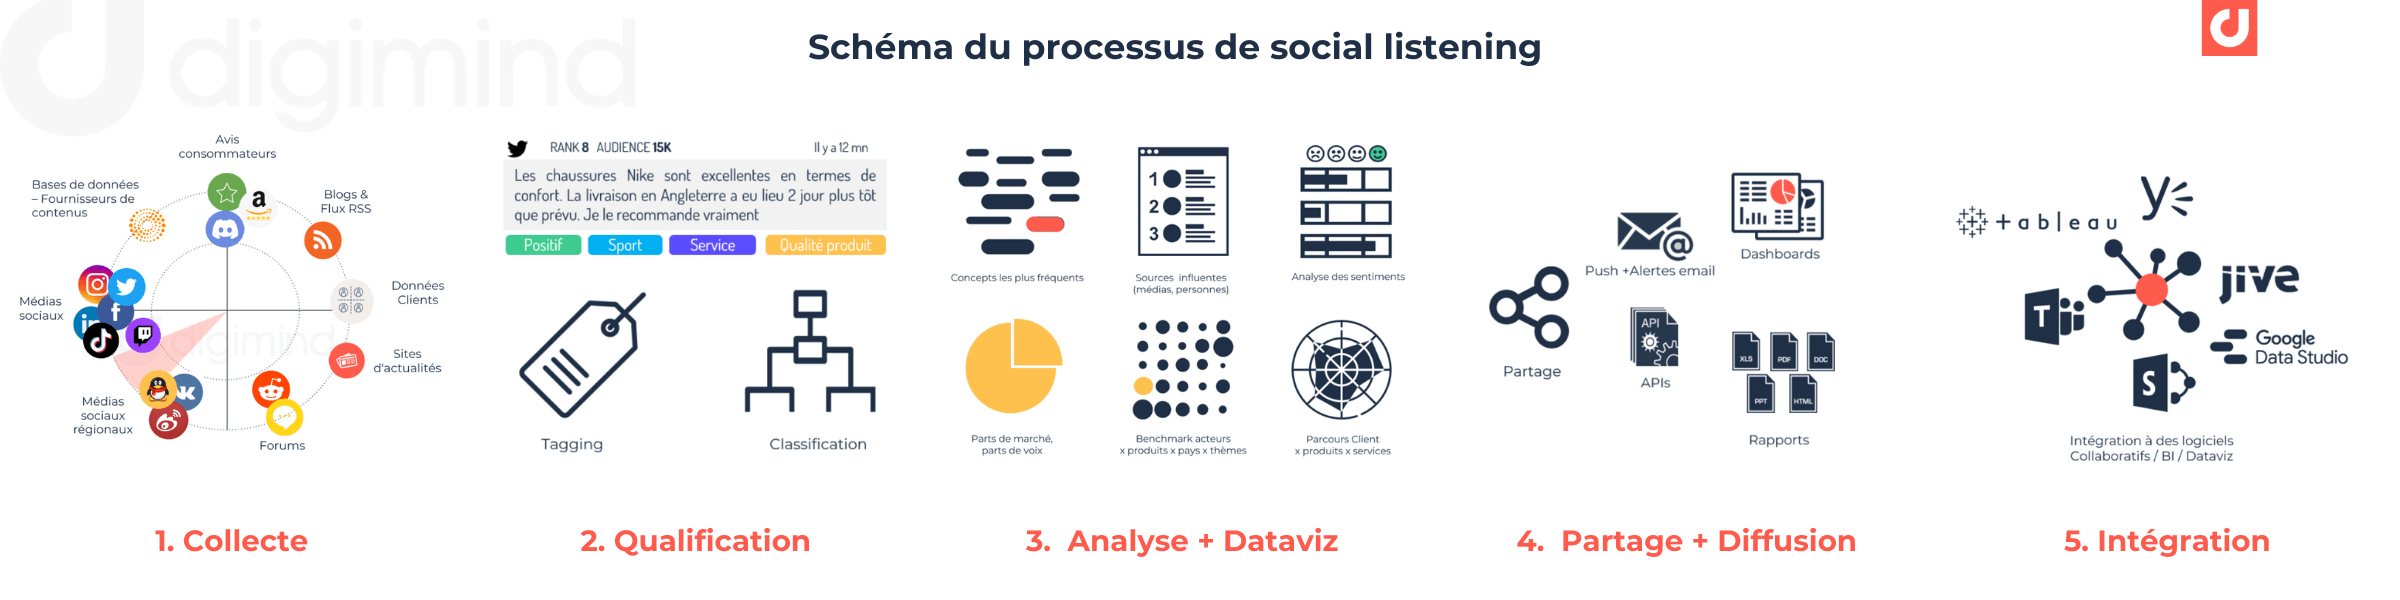 Schéma simplifié du processus de social listening v2-1-1